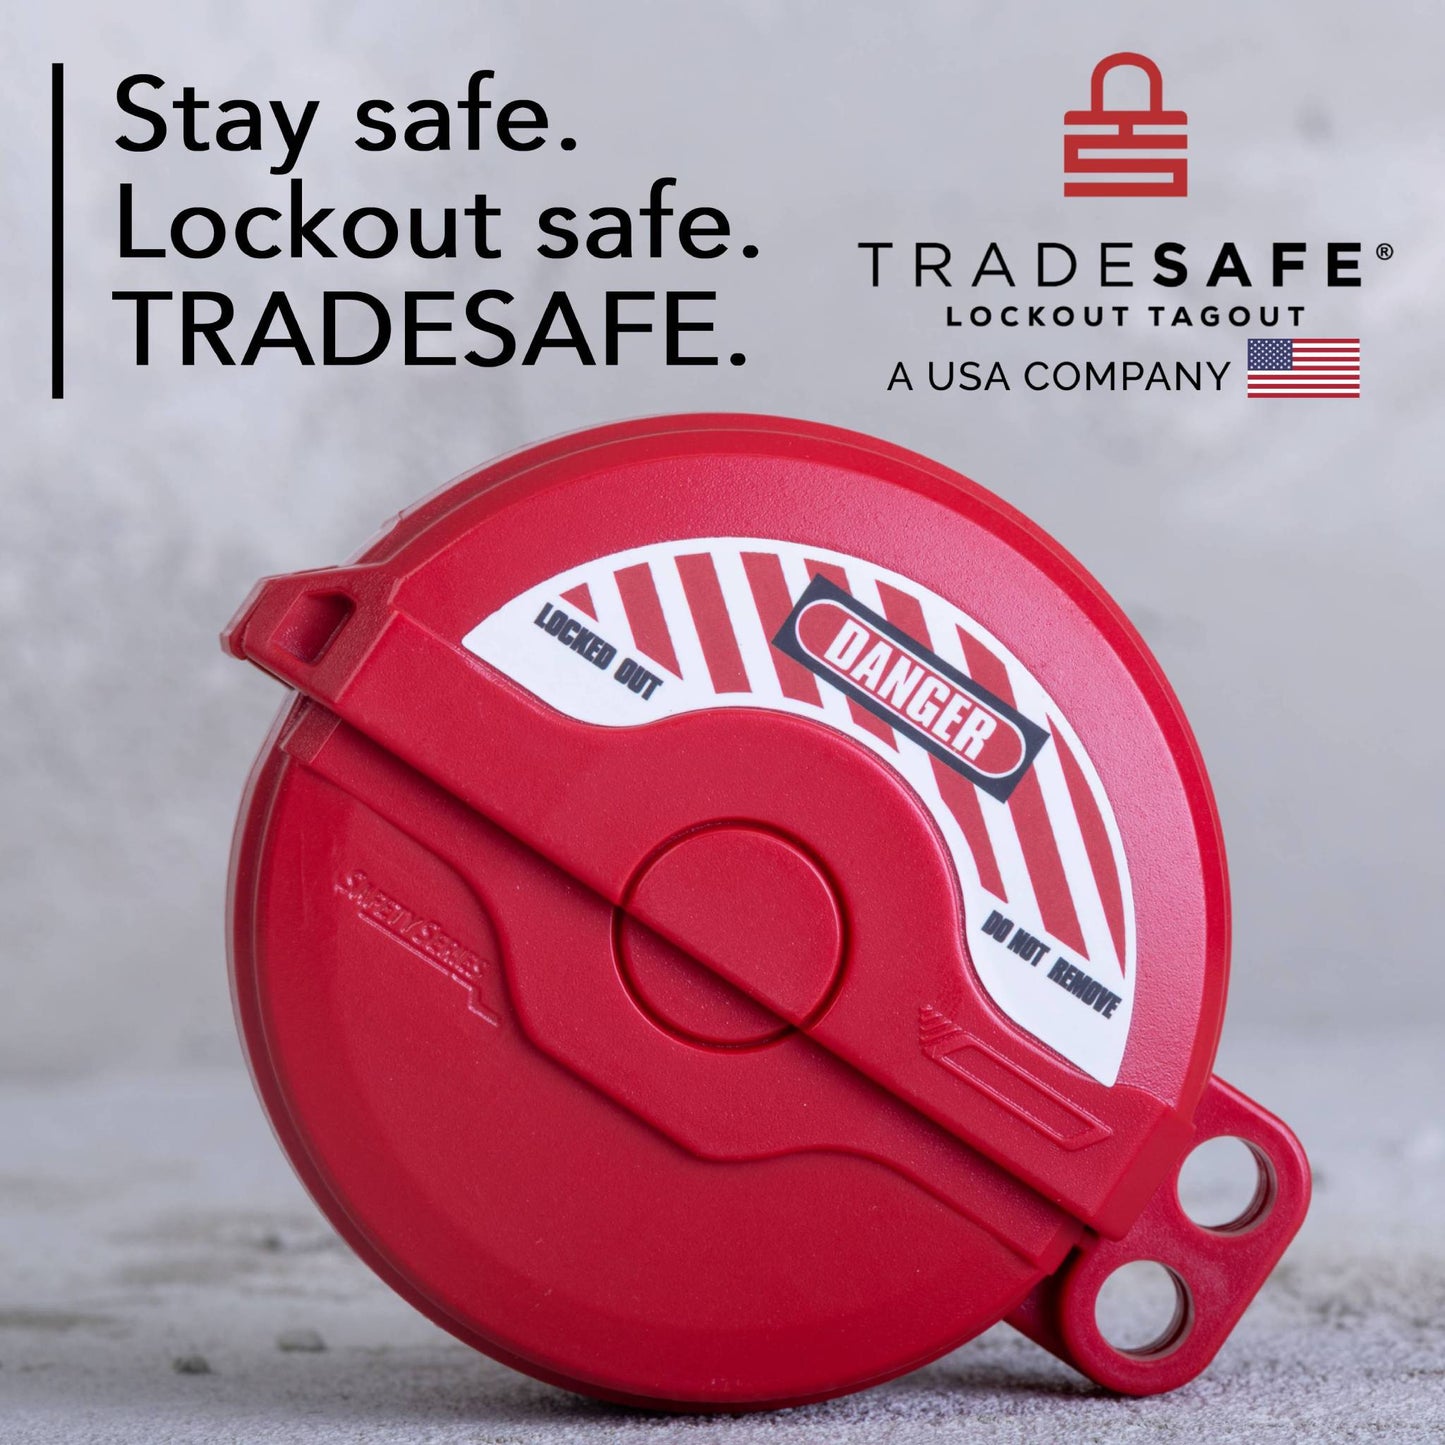 tradesafe lockout tagout f11a gate valve brand image